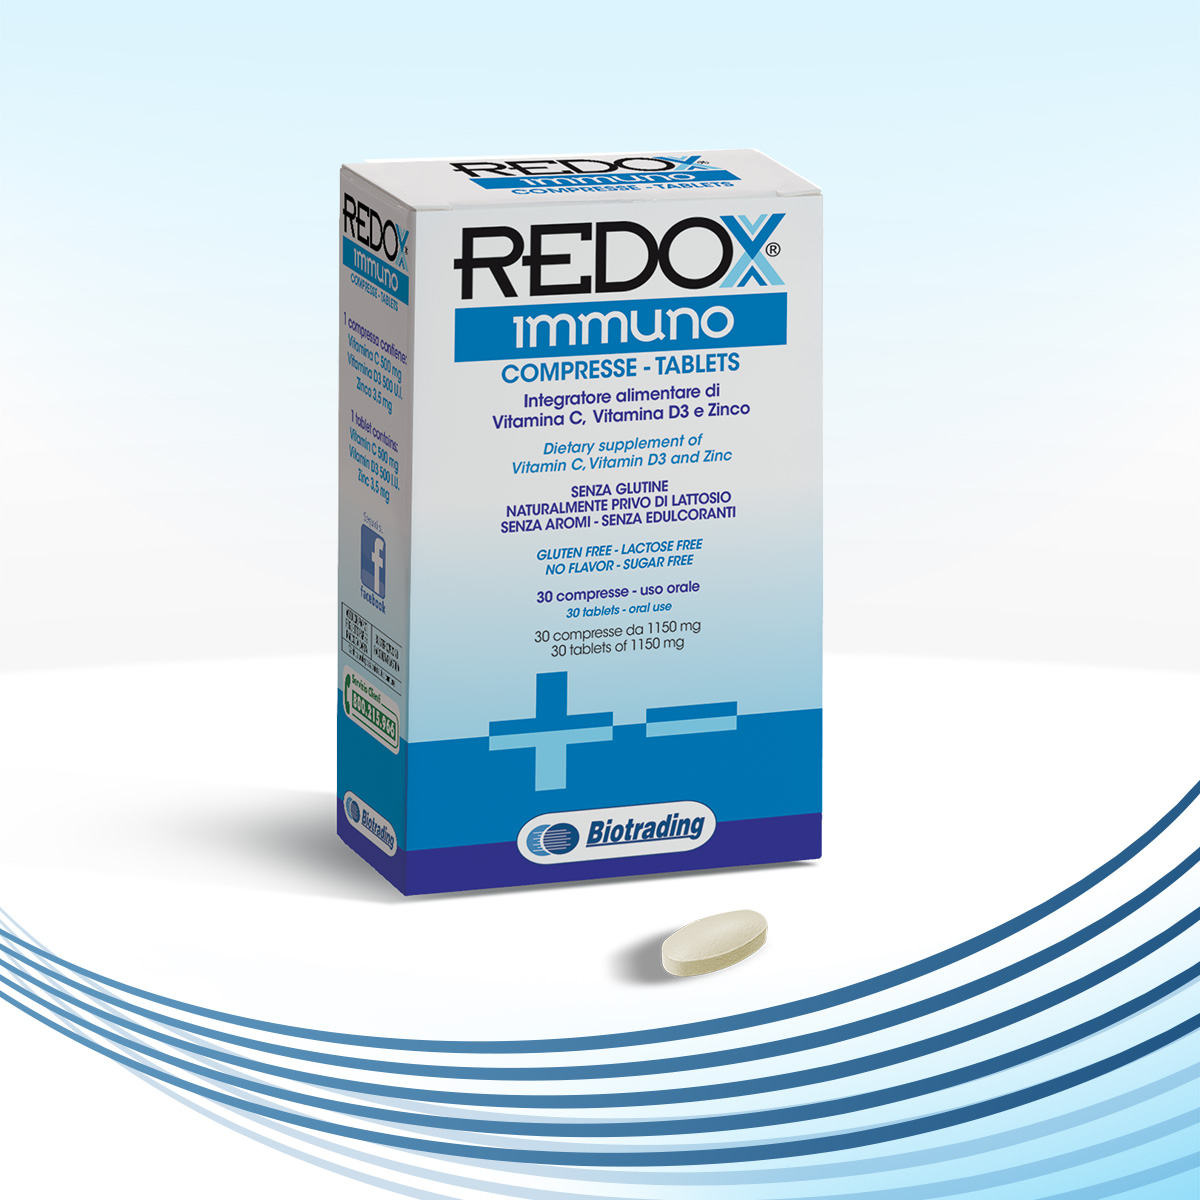 Redox Immuno tablets